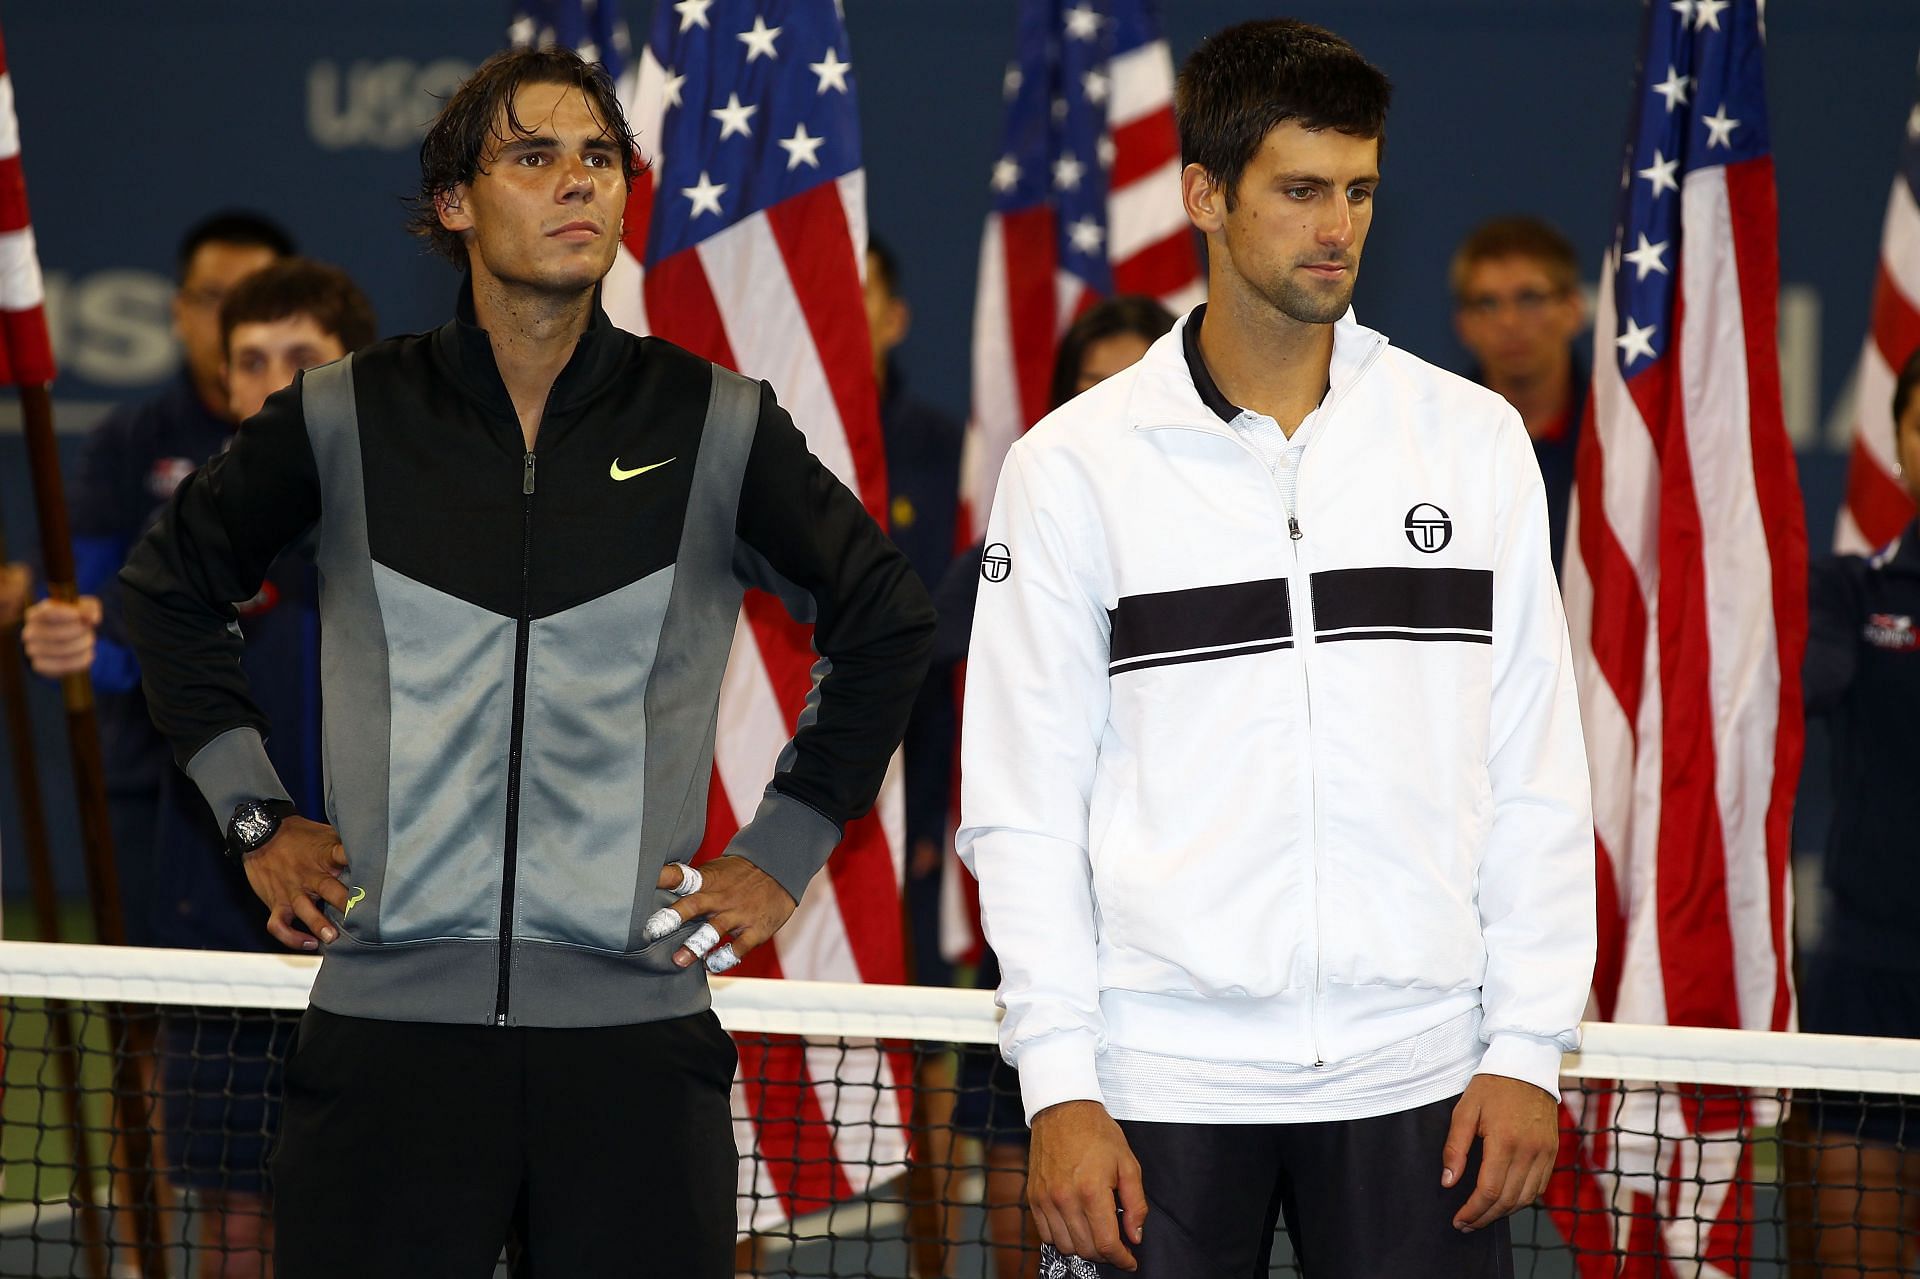 Rafael Nadal and Novak Djokovic after the 2010 US Open final